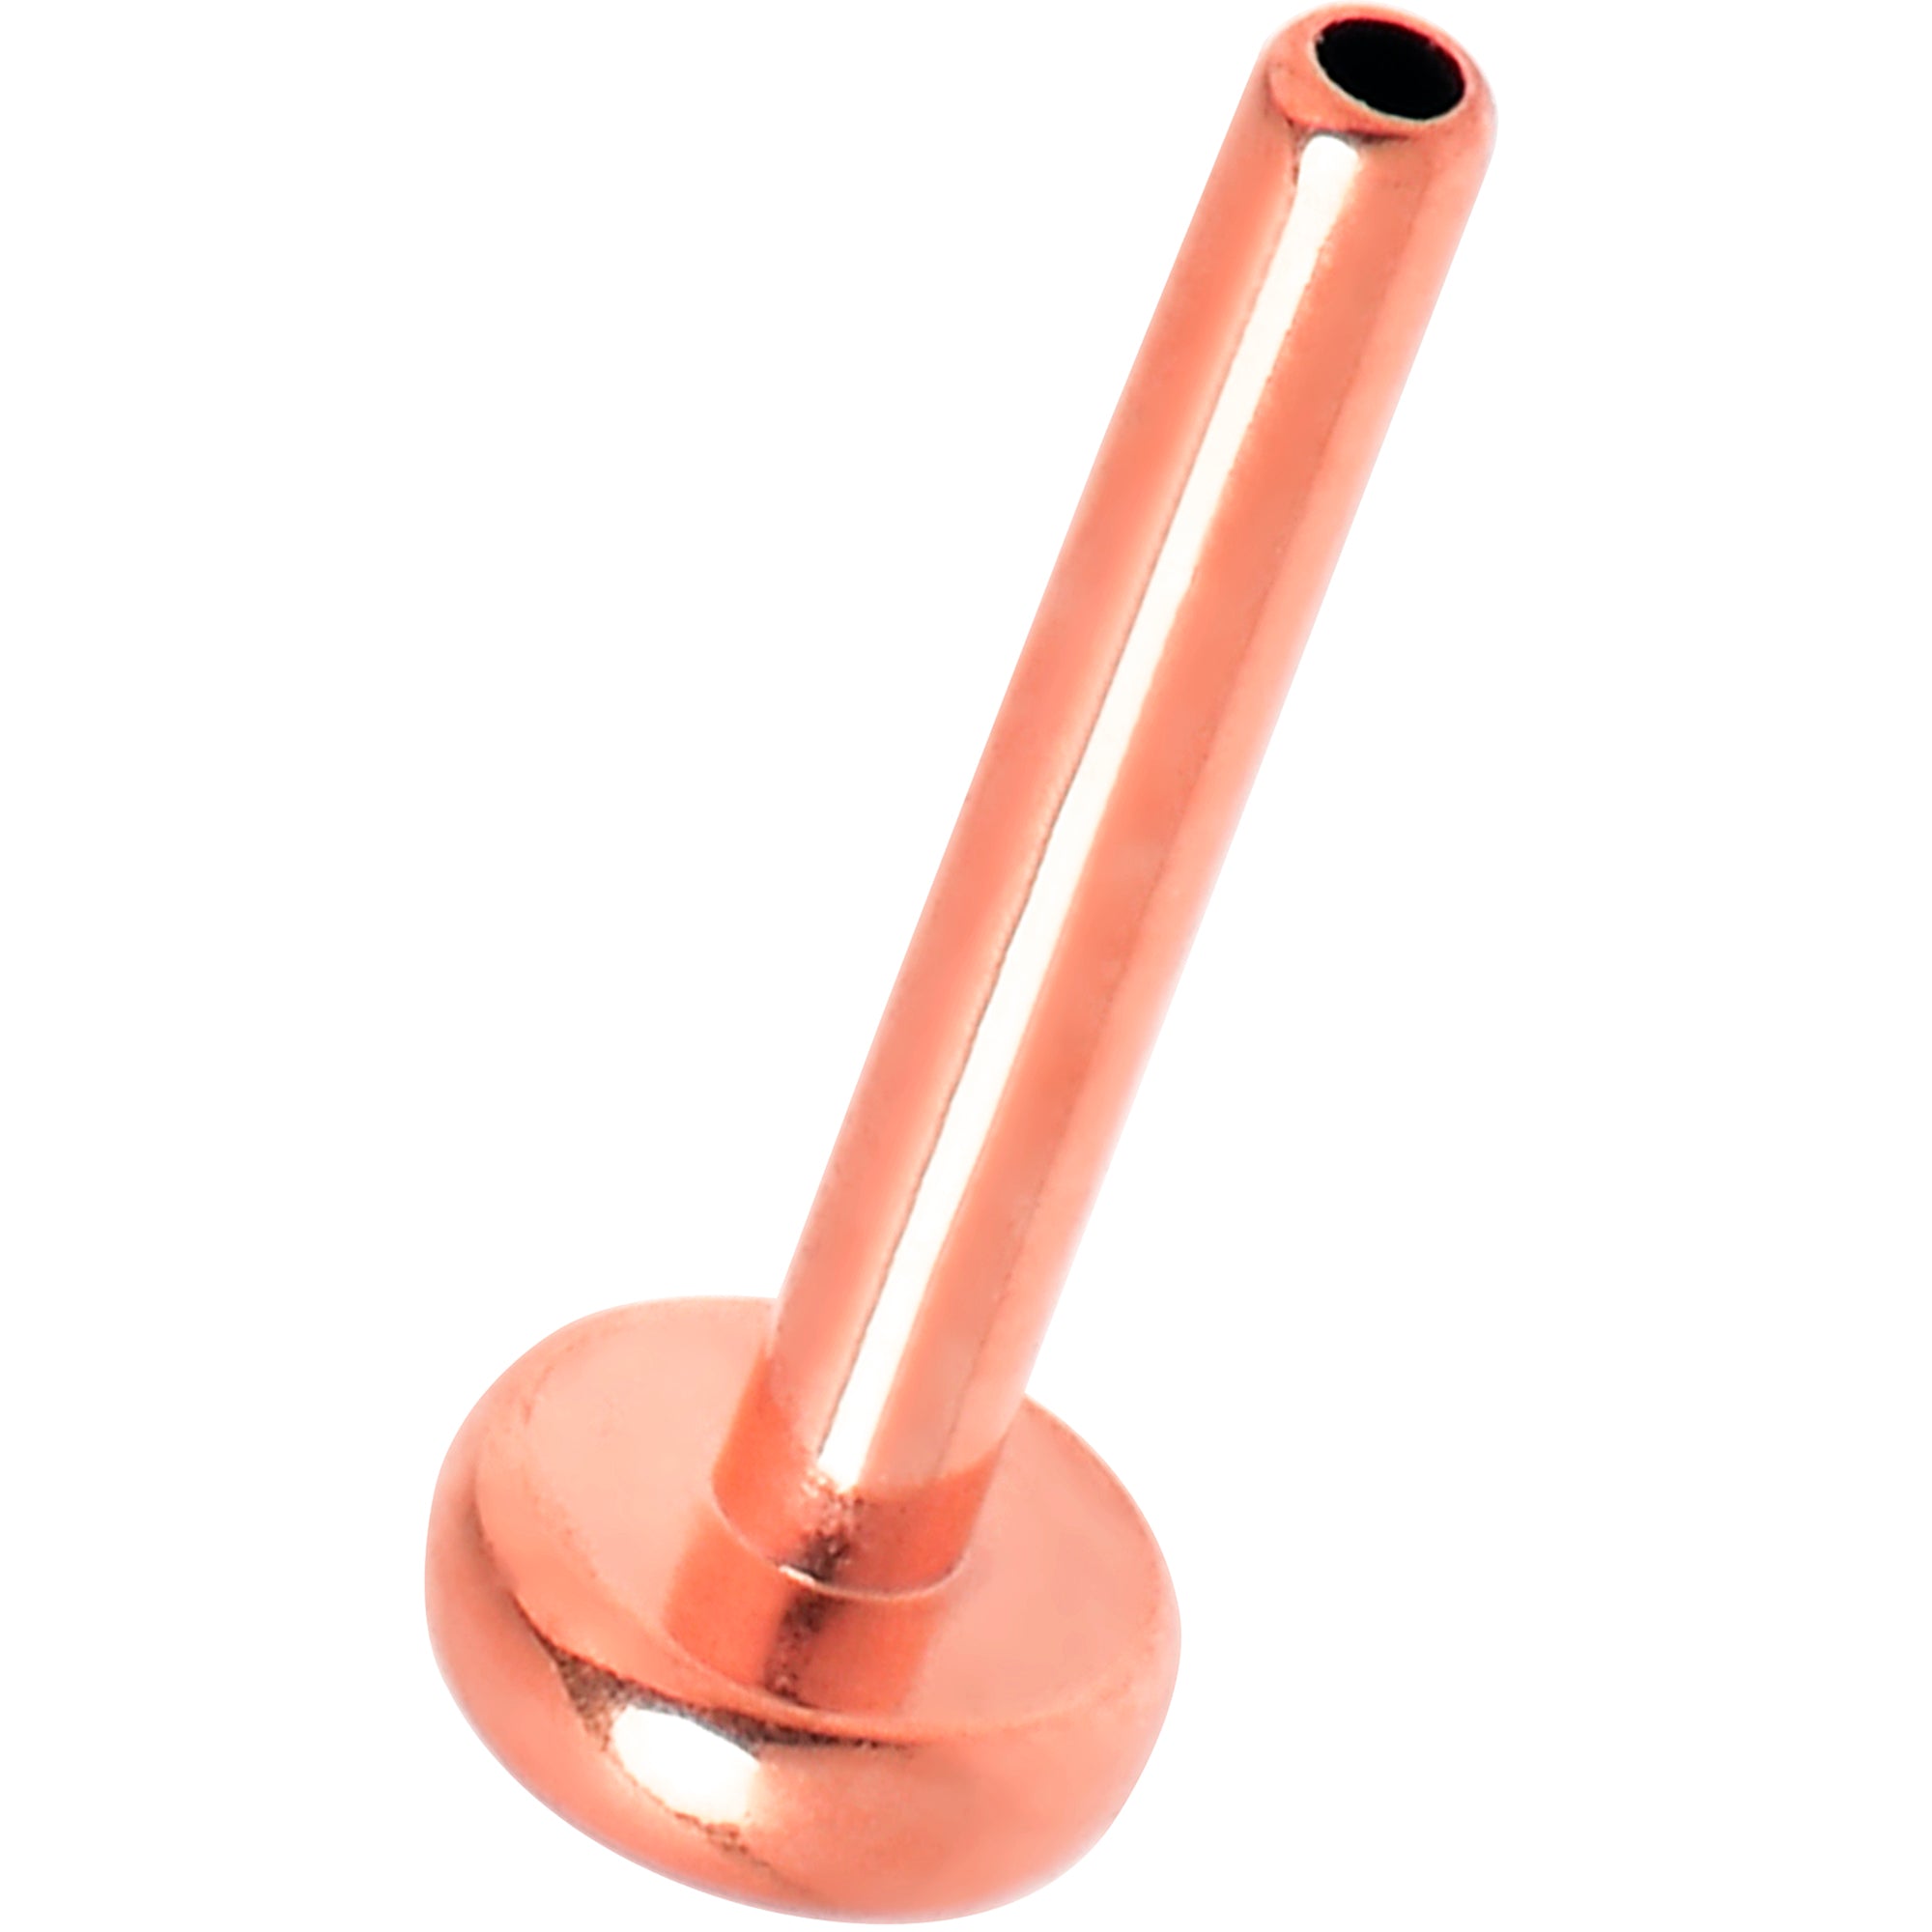 20 Gauge 1/4 Rosy Tone ASTM F-136 Implant Grade Titanium Threadless Post Only Labret